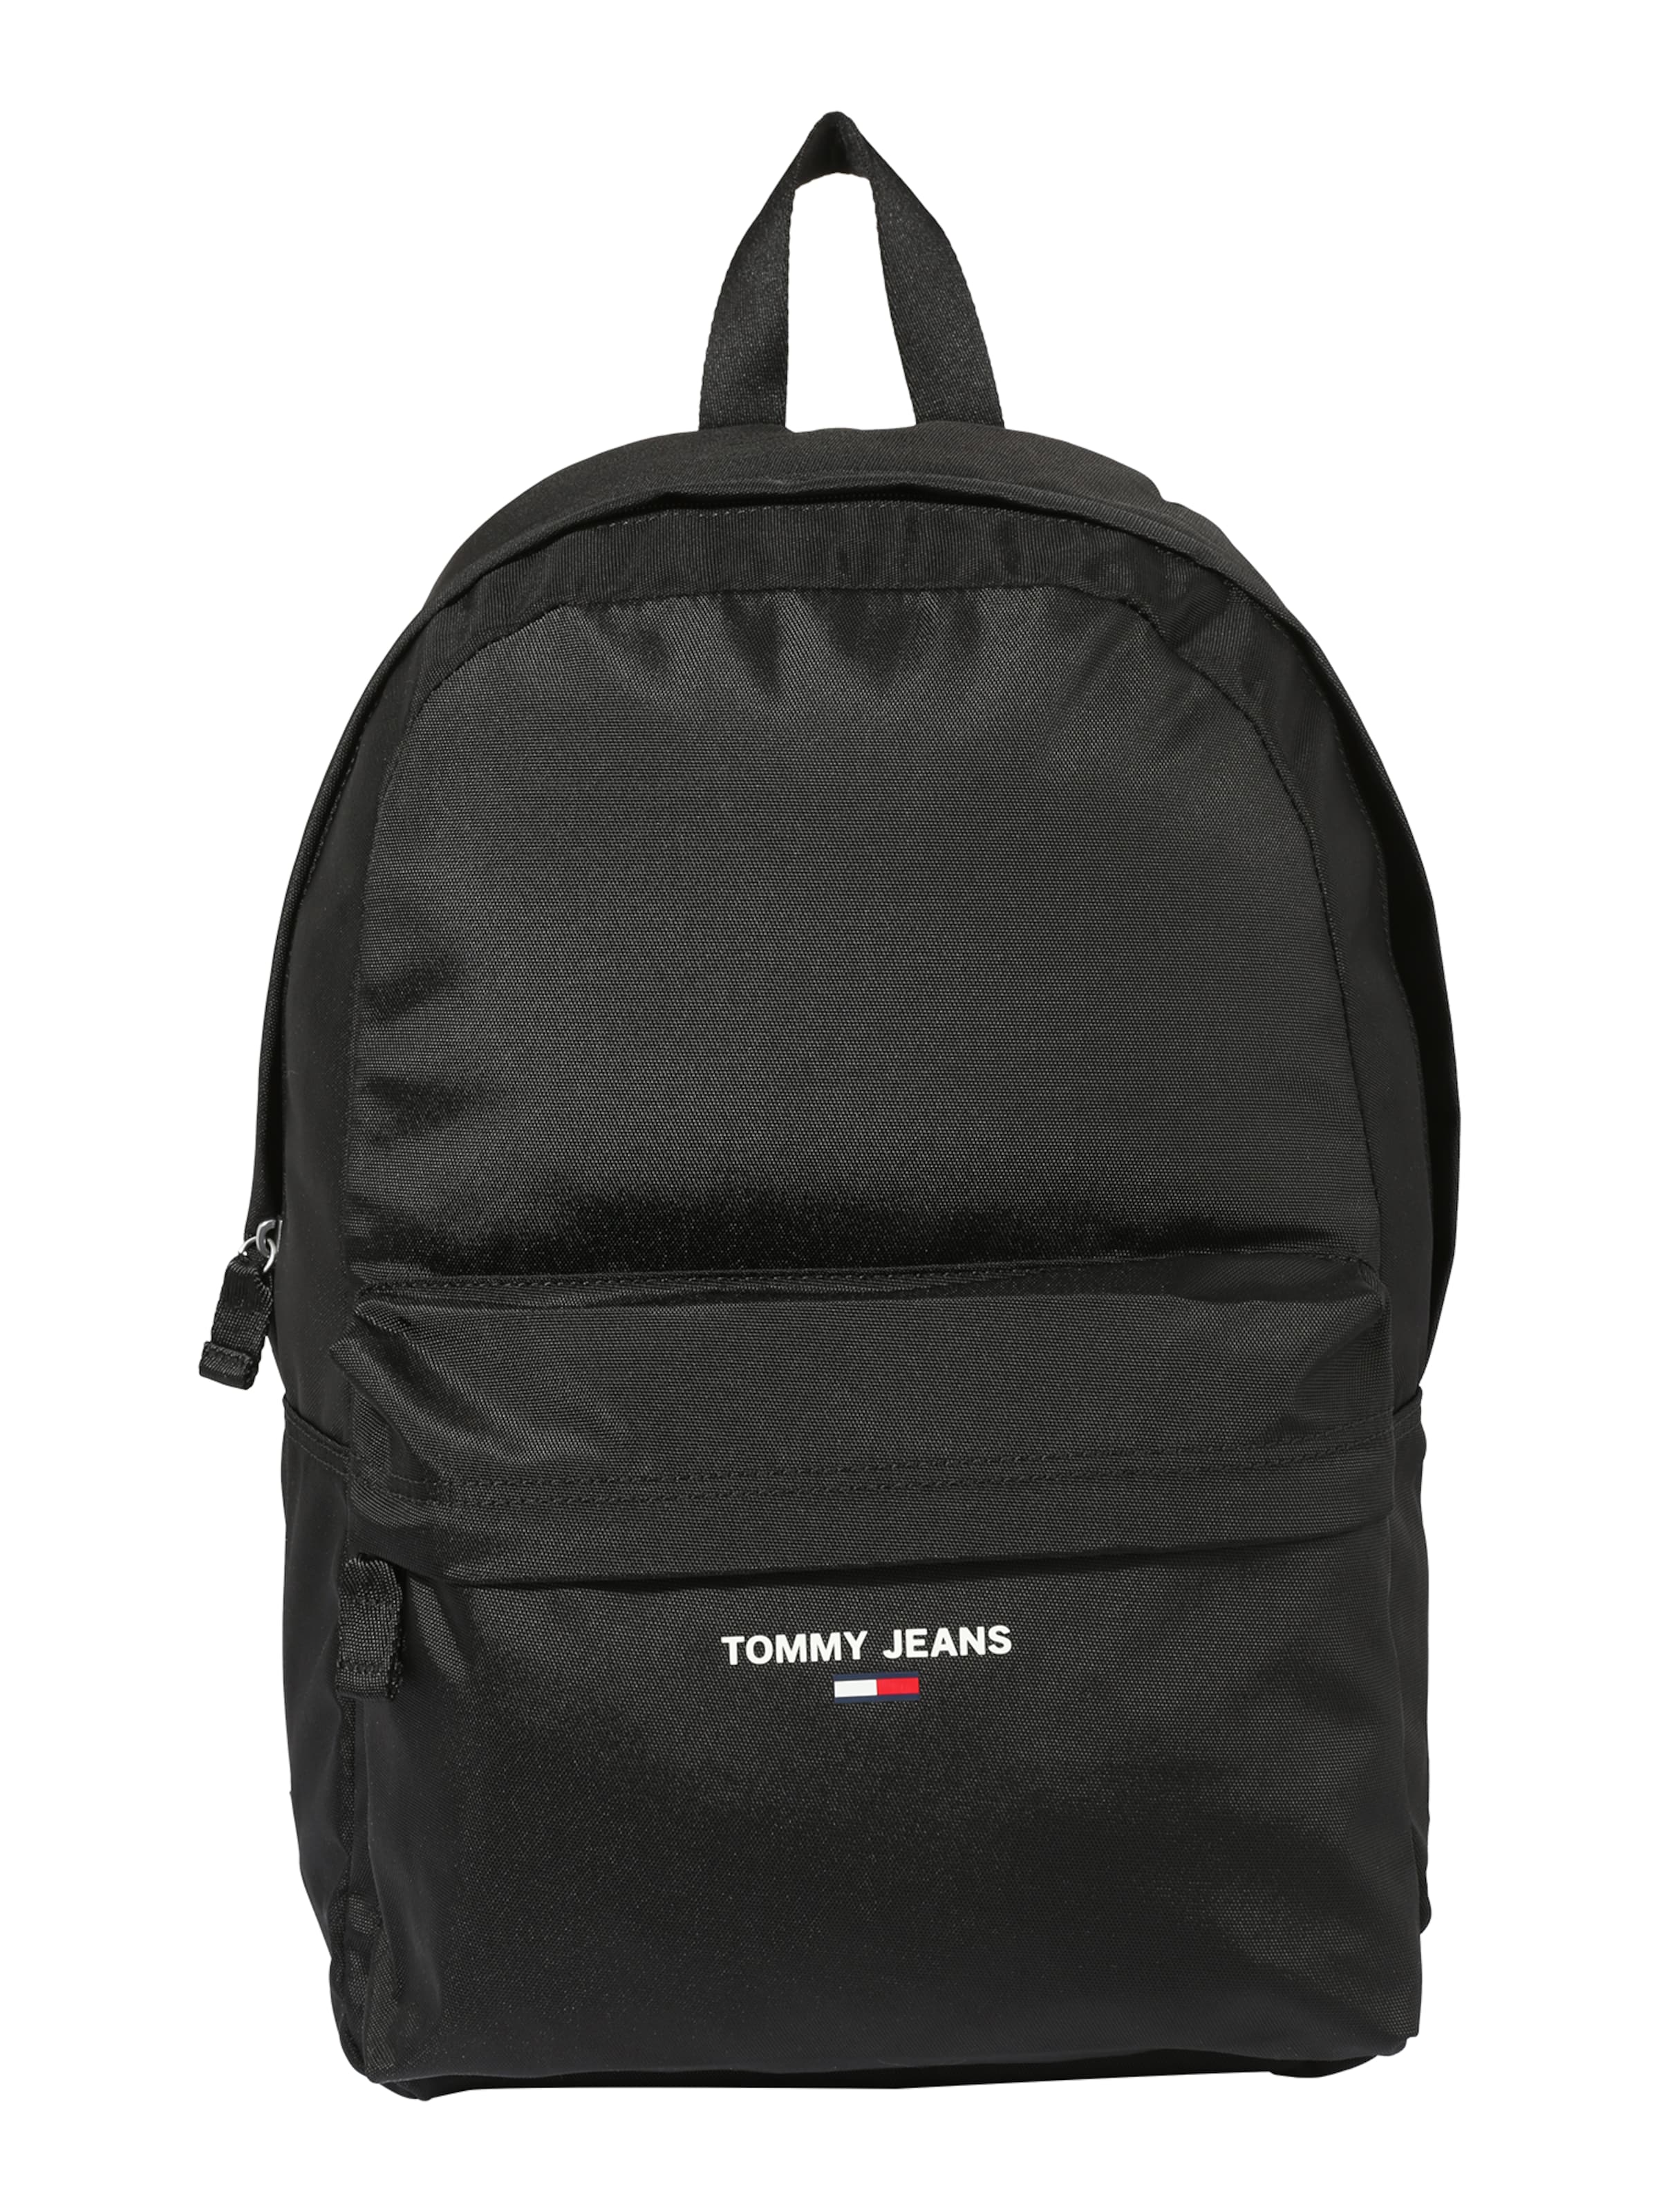 Men Bags & backpacks | Tommy Jeans Backpack in Black - UO13488